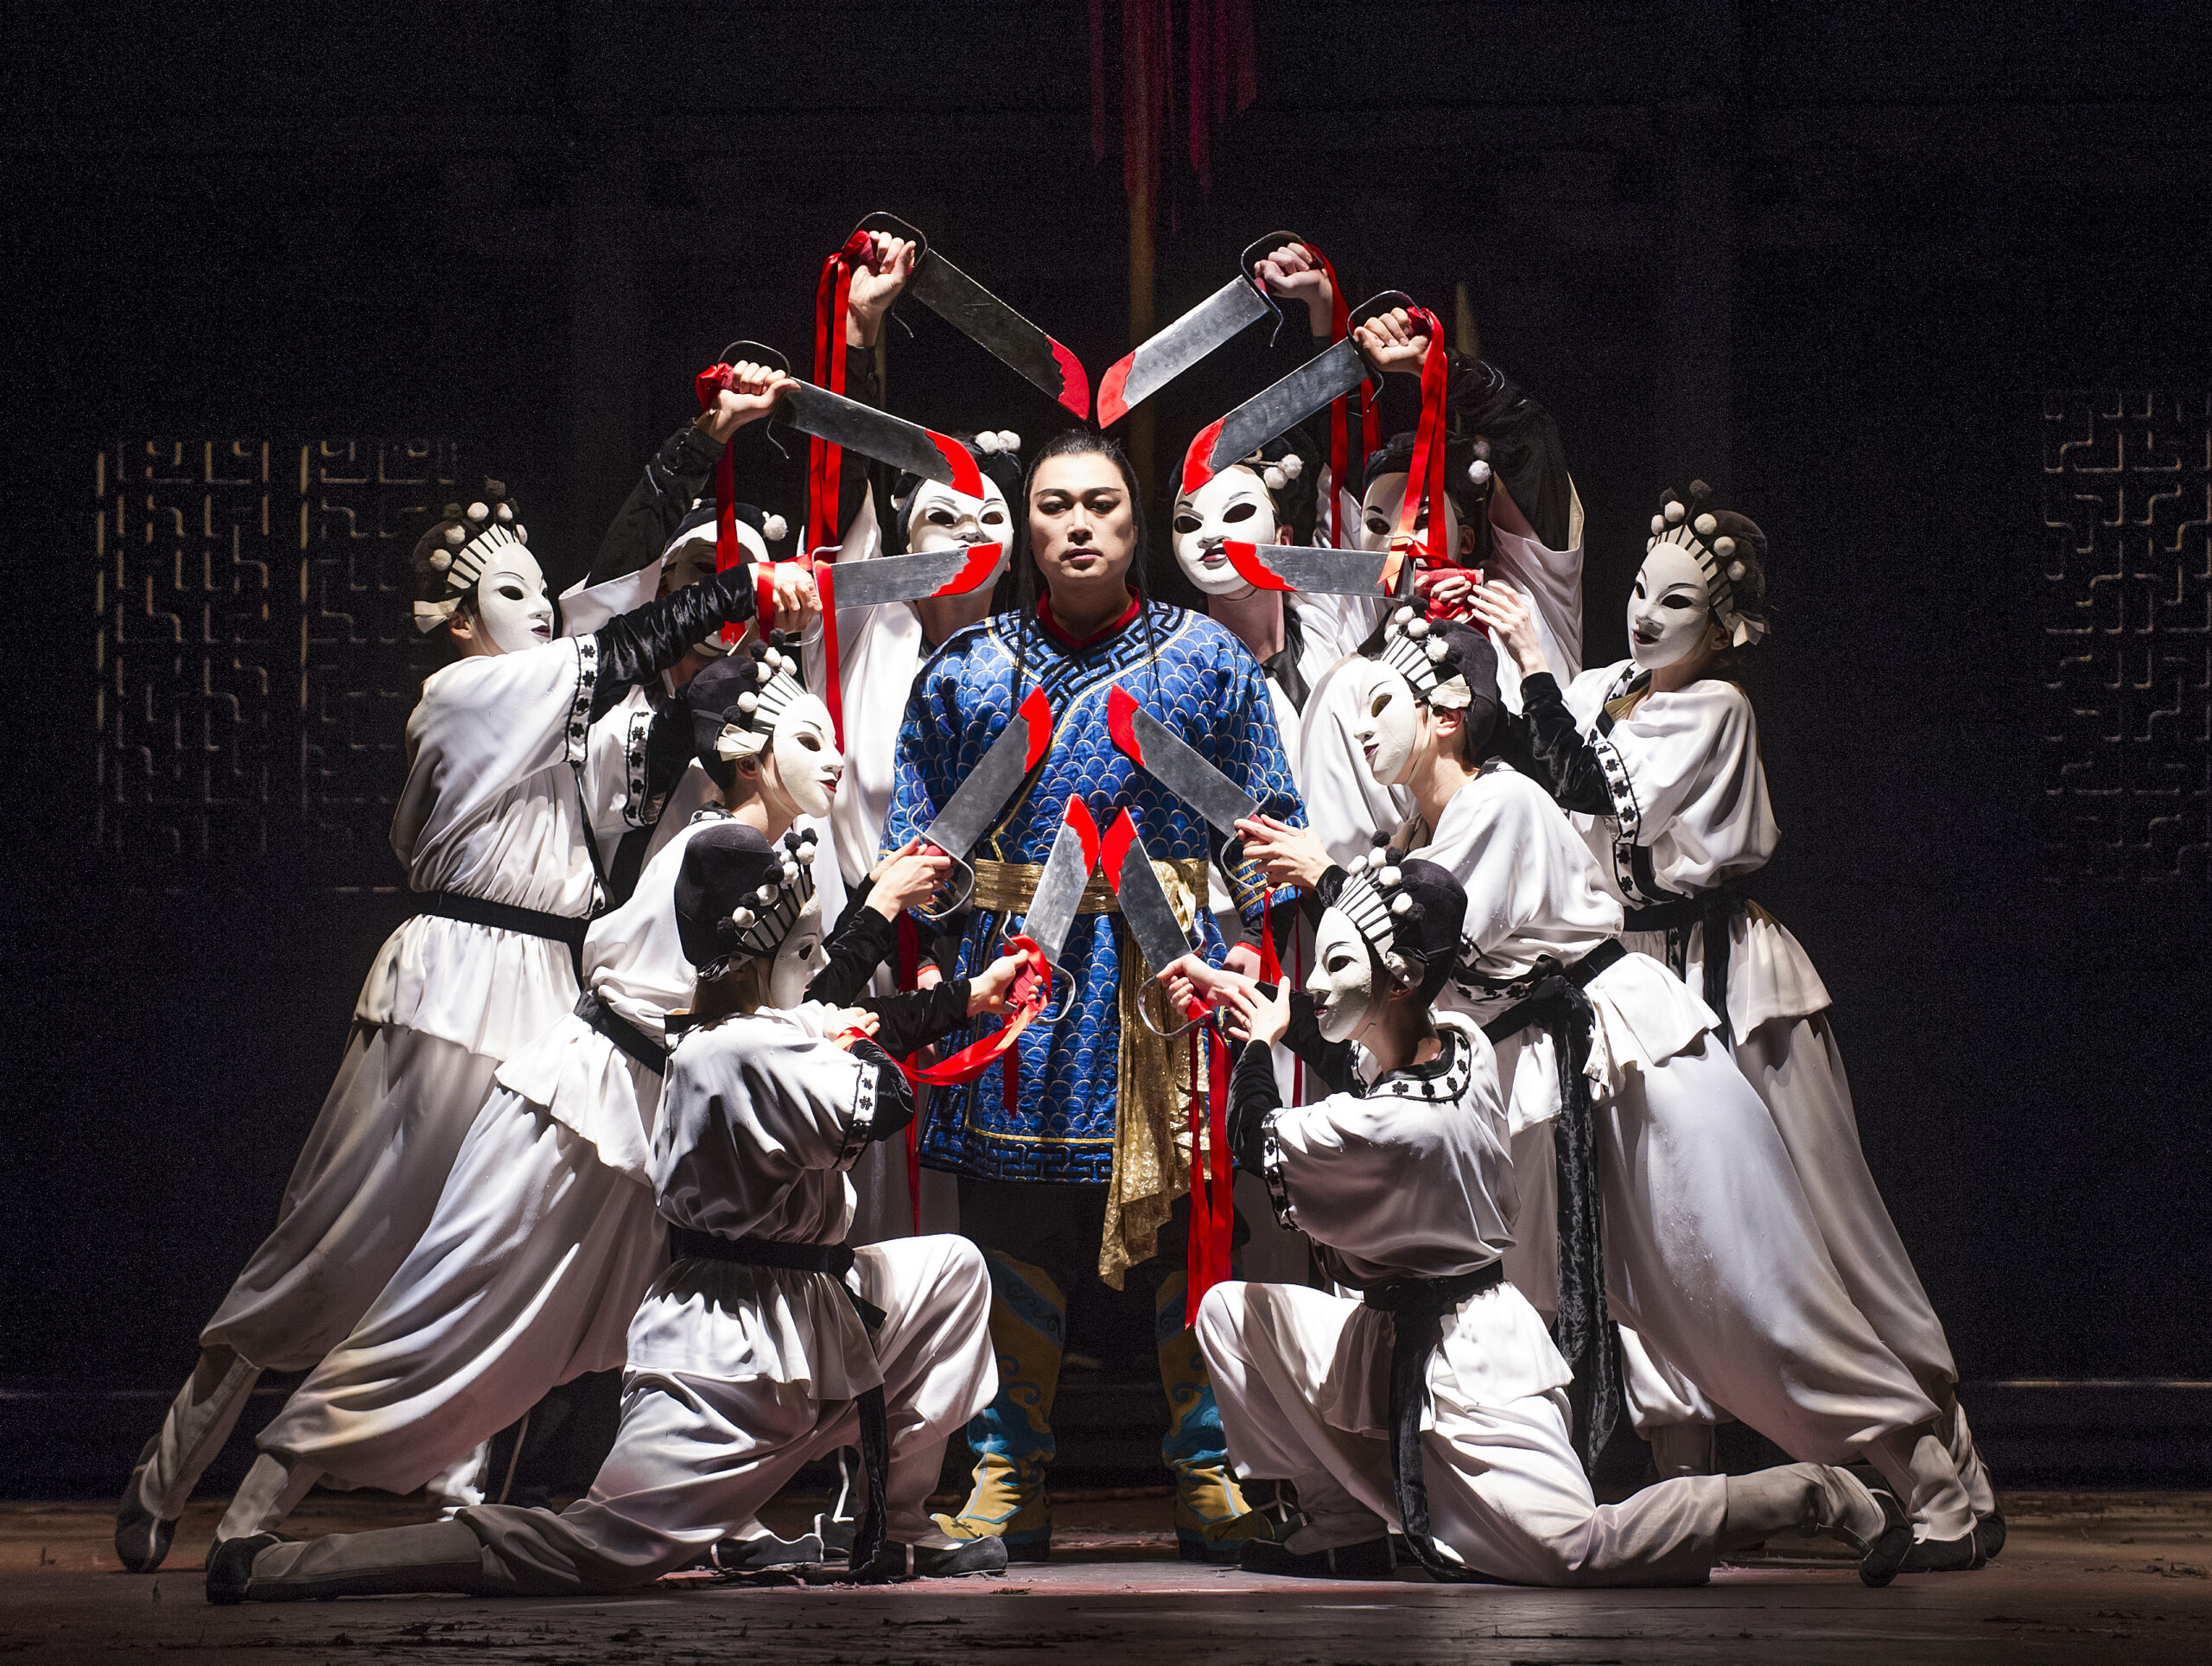 Ópera “Turandot” llega a Toluca desde el escenario de Londres